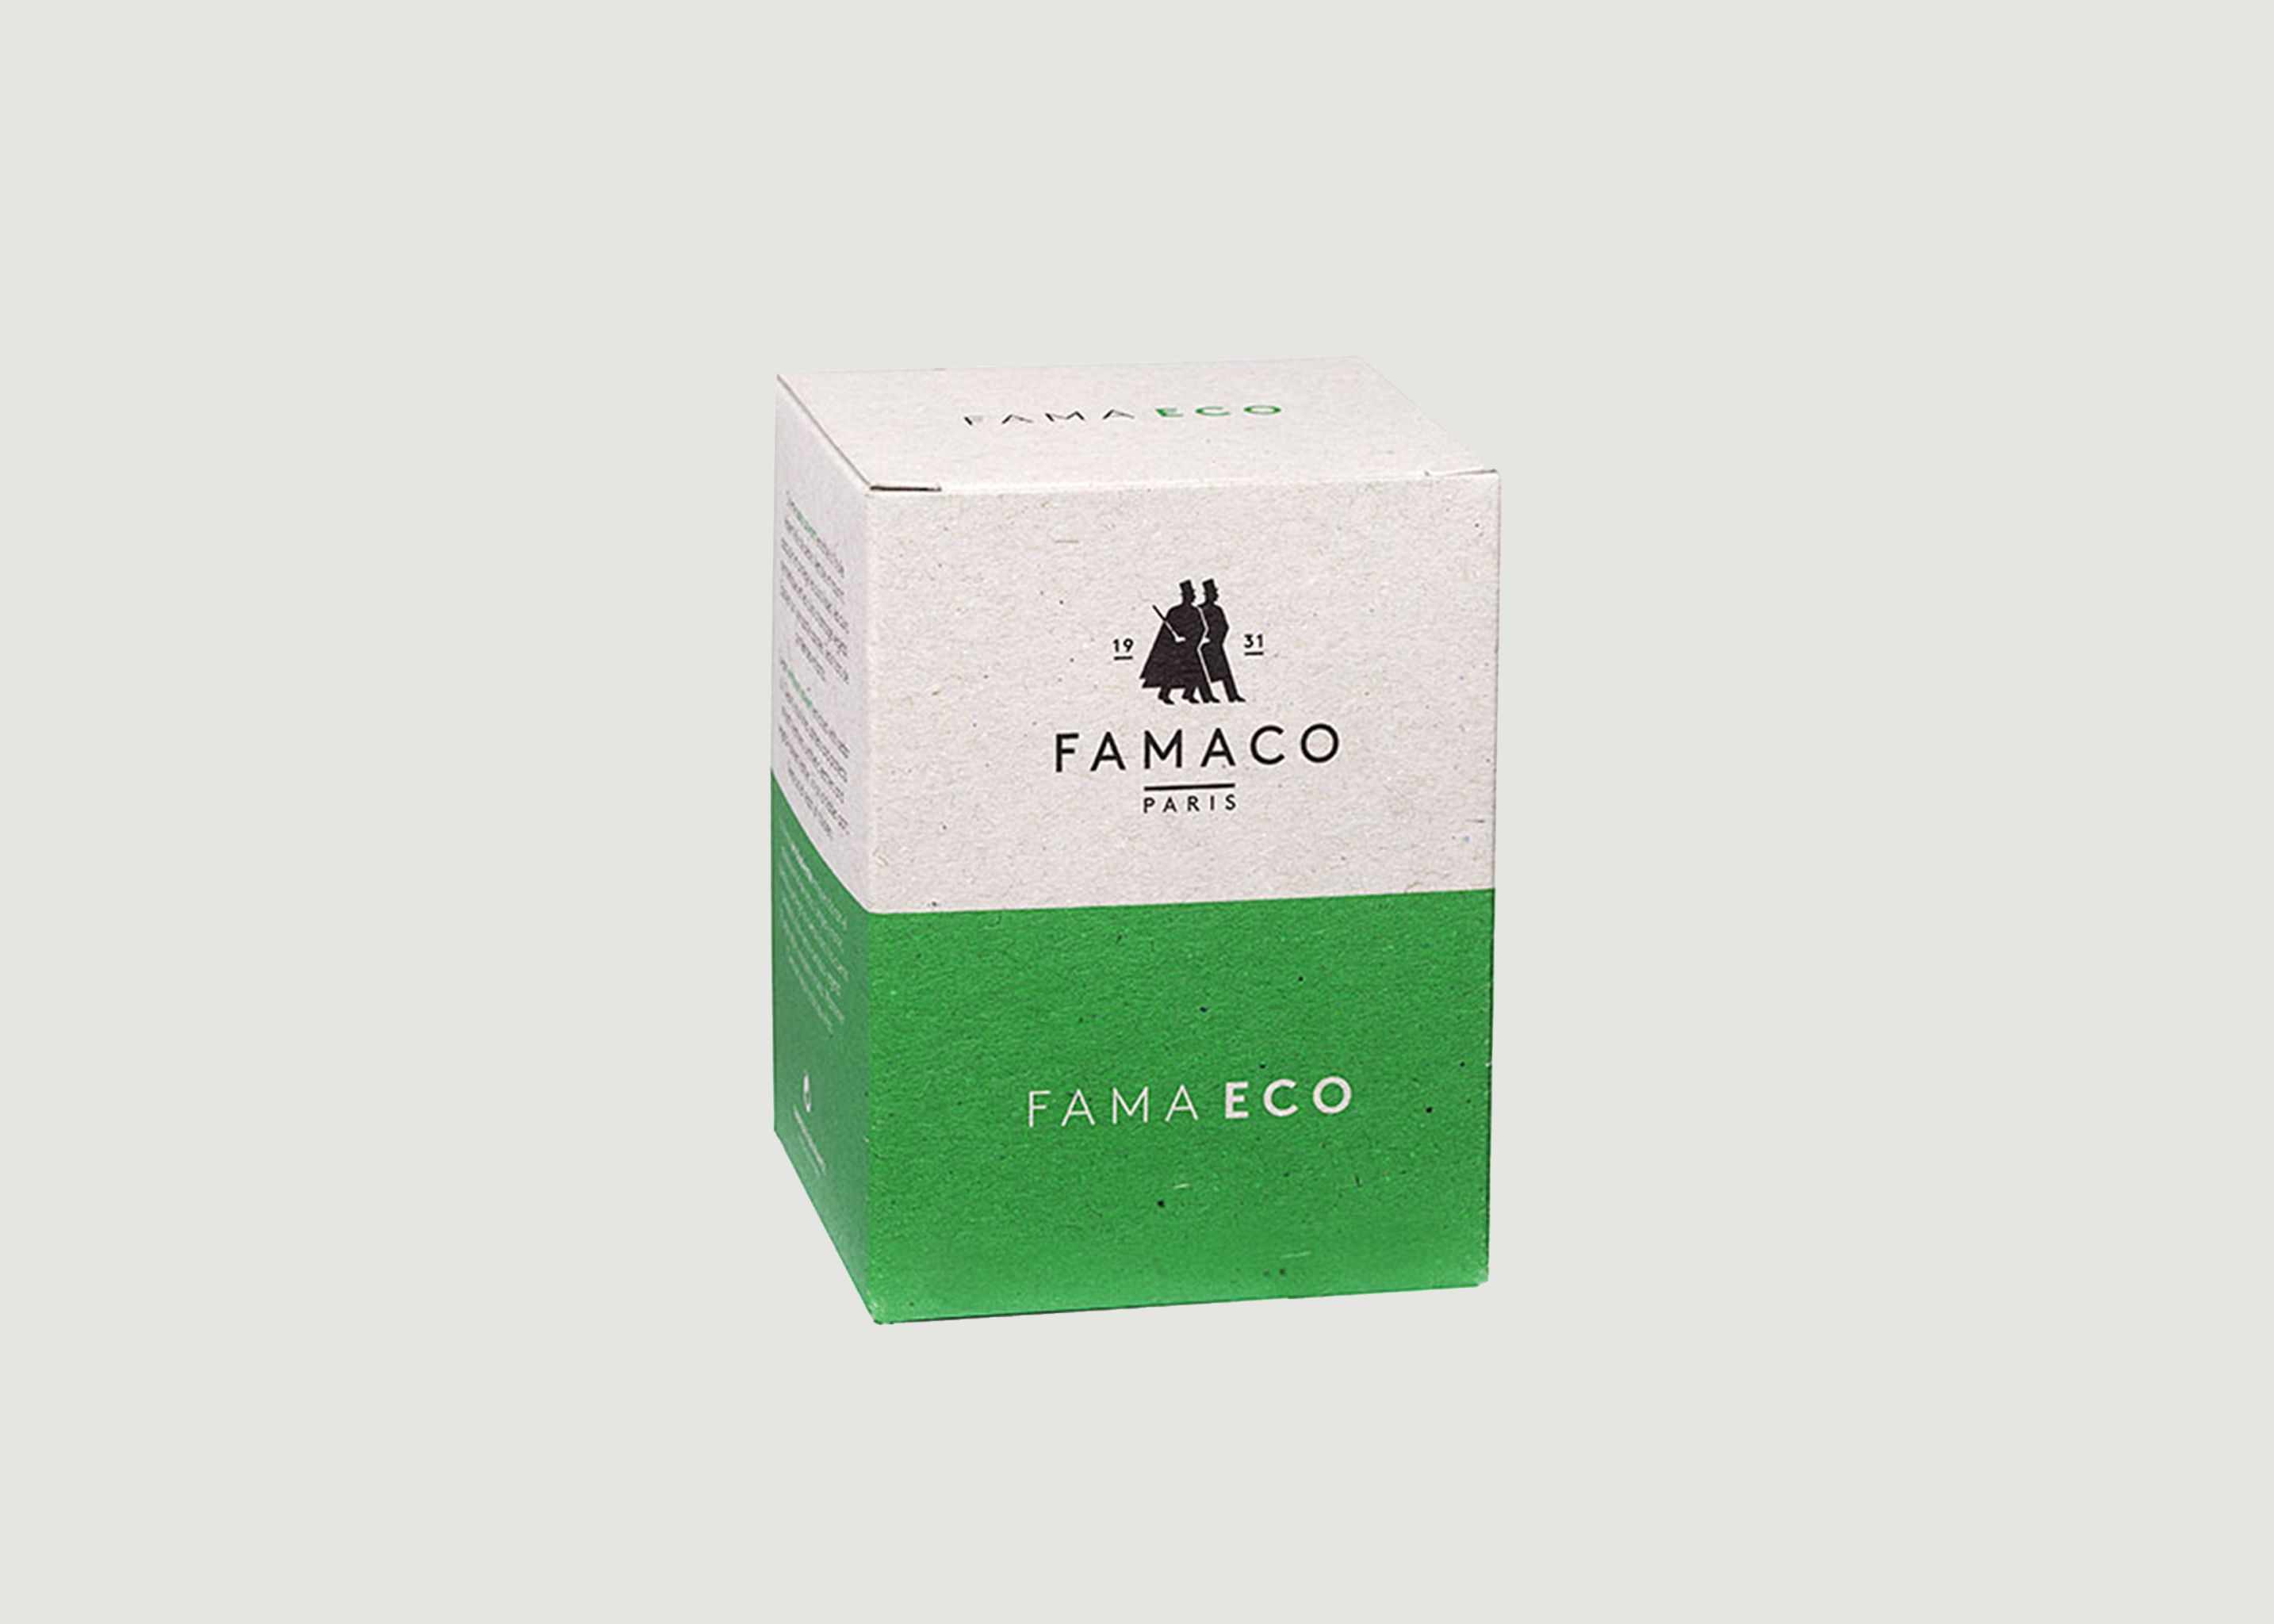 Fama Eco 50ml - Famaco Paris